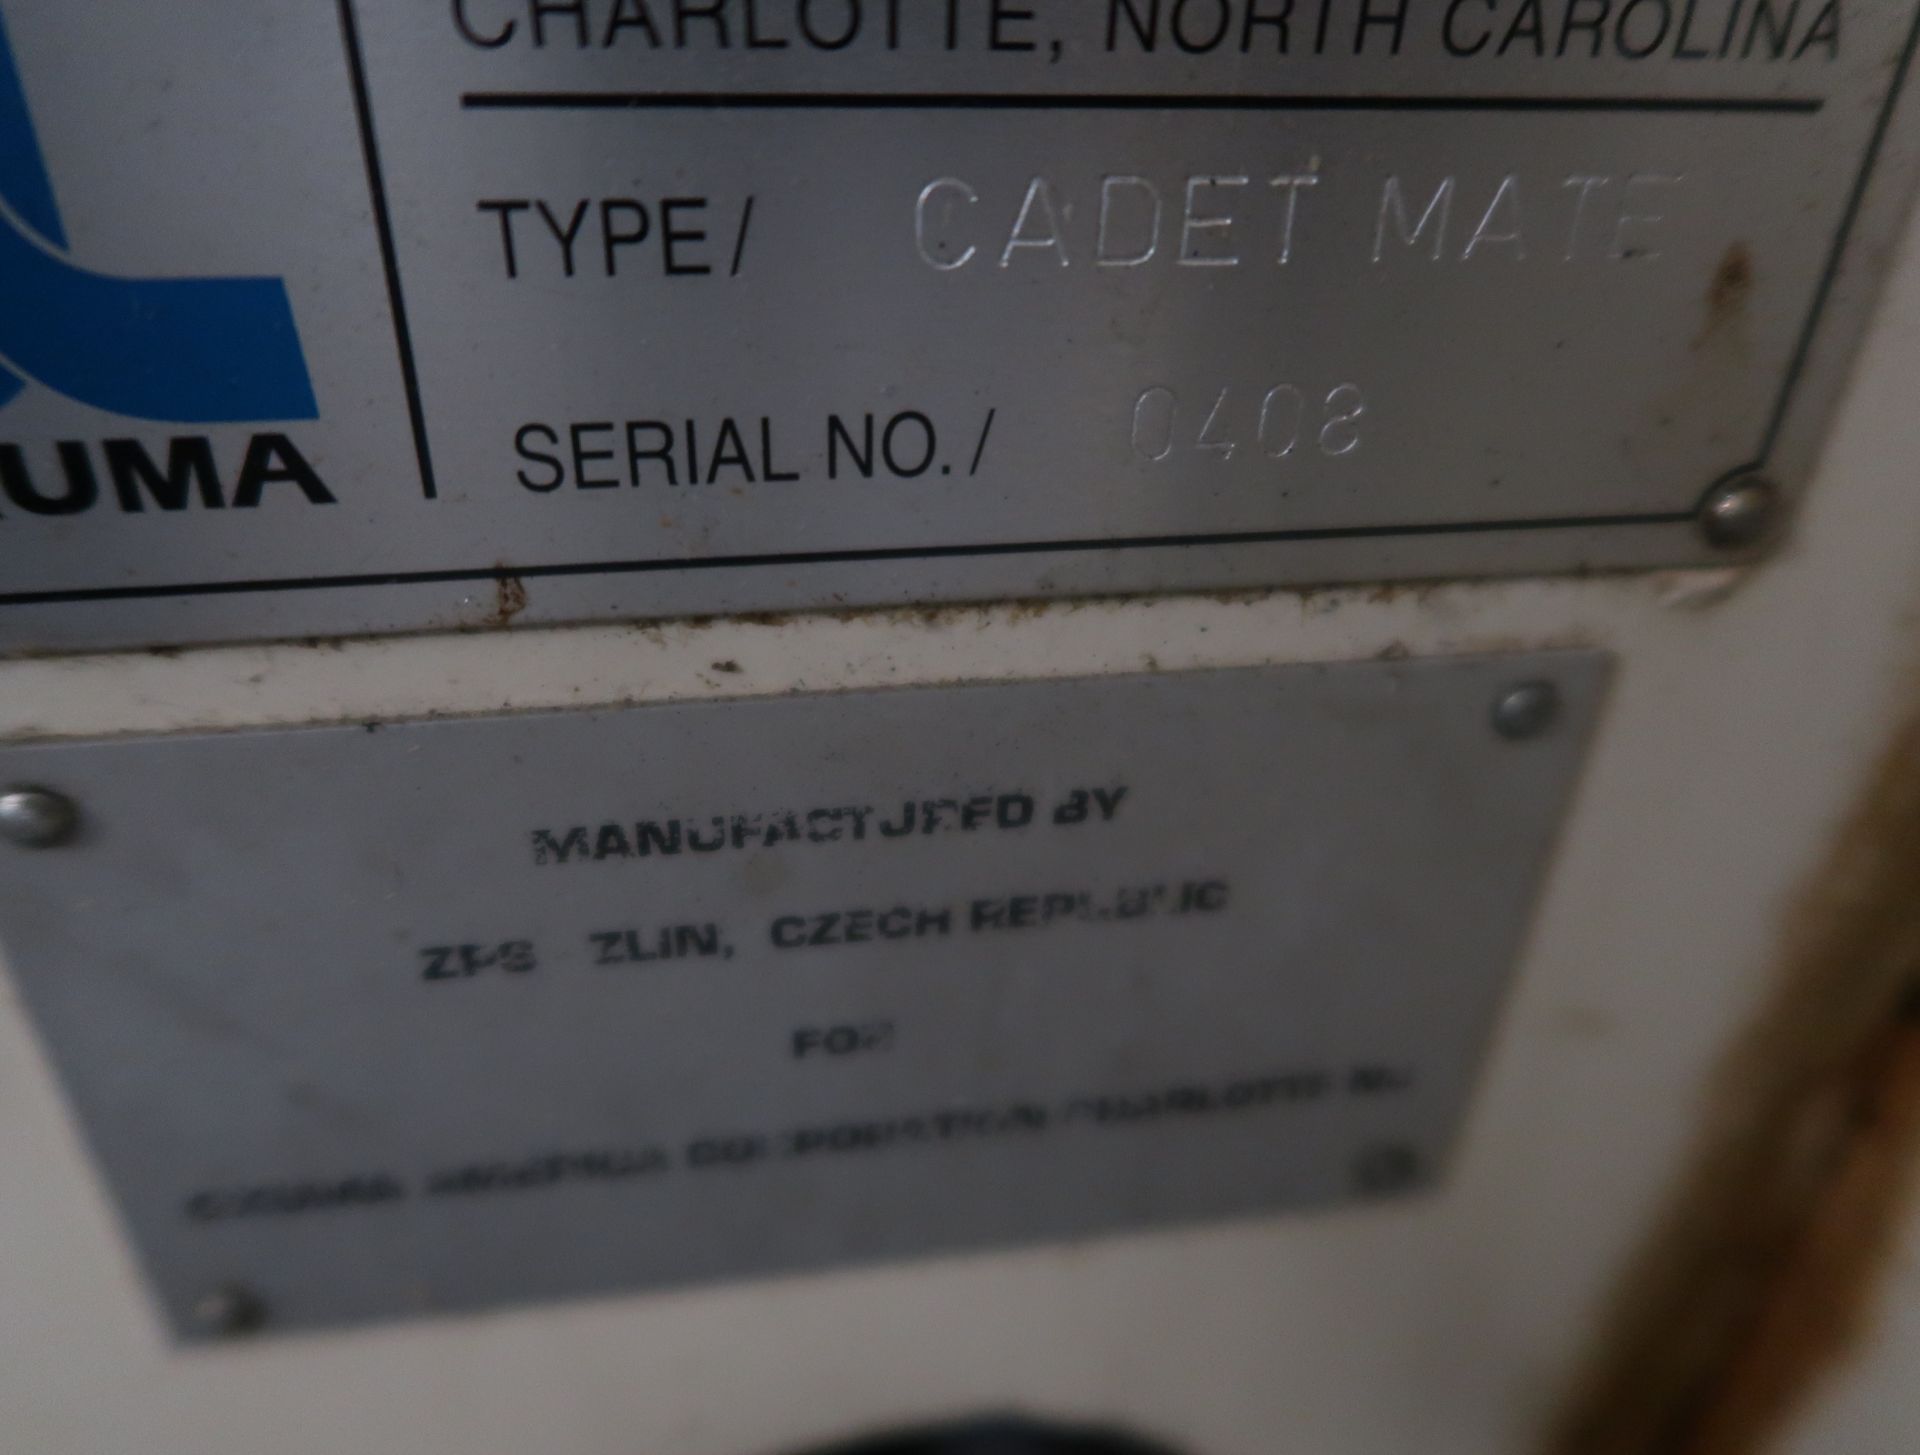 1998 OKUMA CADET-MATE 4020 CNC VERTICAL MACHINING CENTER, OSP-700M CONTROL, SN. 0408 (NOT OPERATIONA - Image 4 of 4